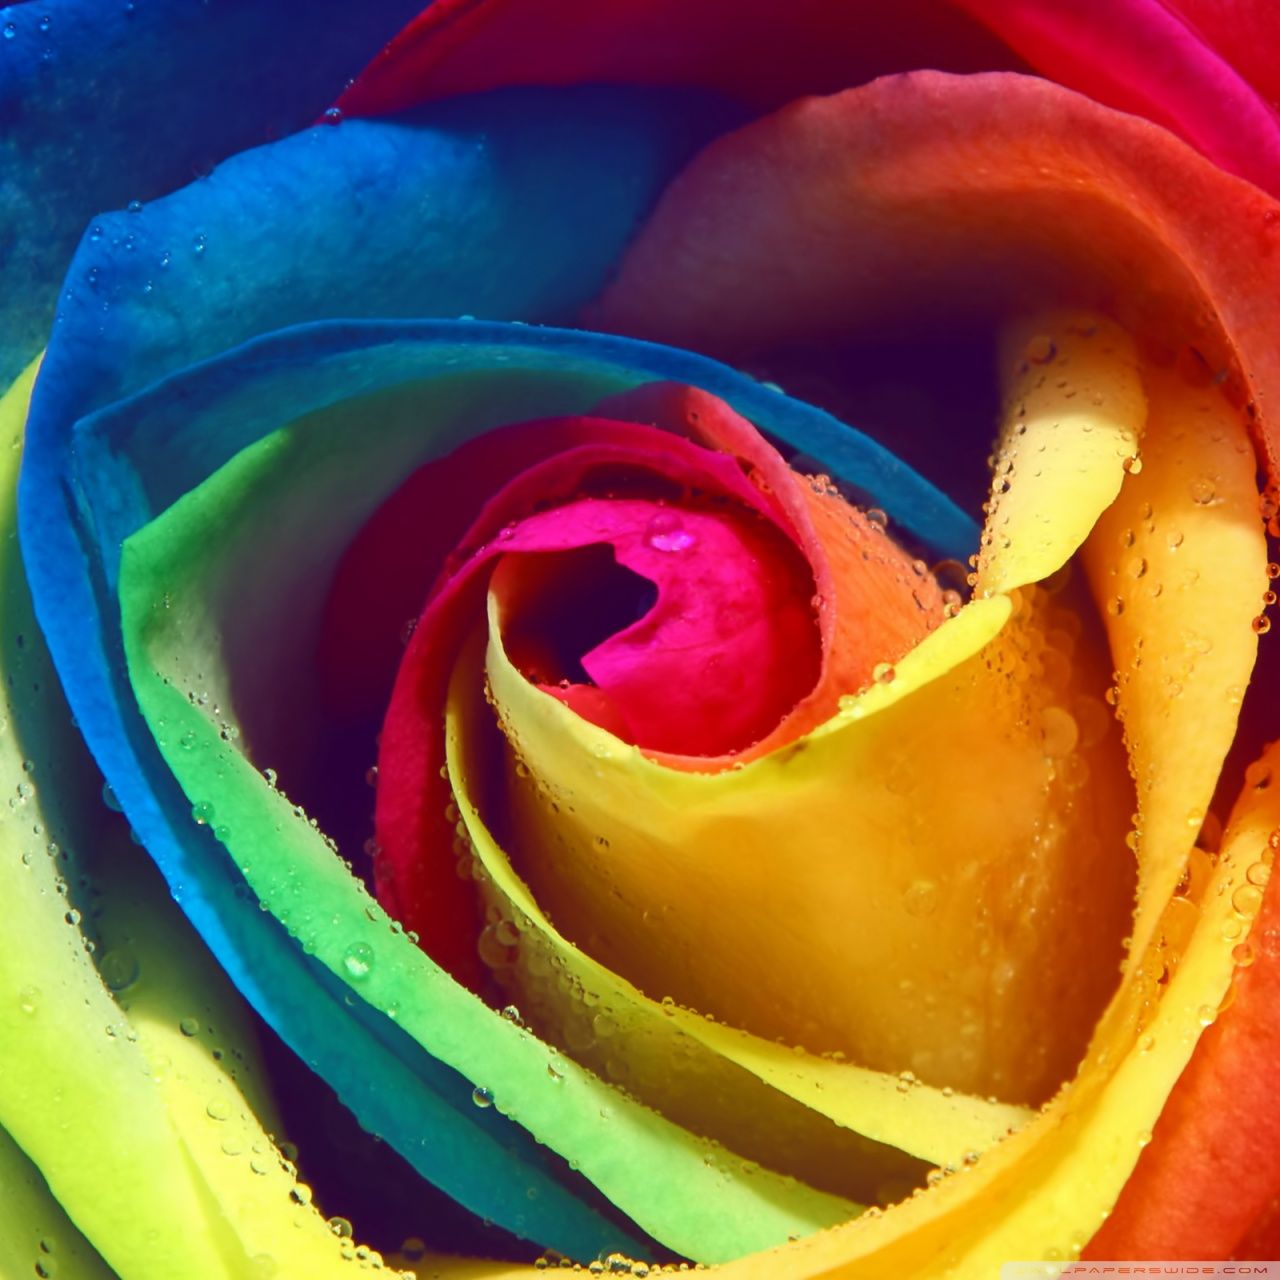 Background Rainbow Rose Wallpaper